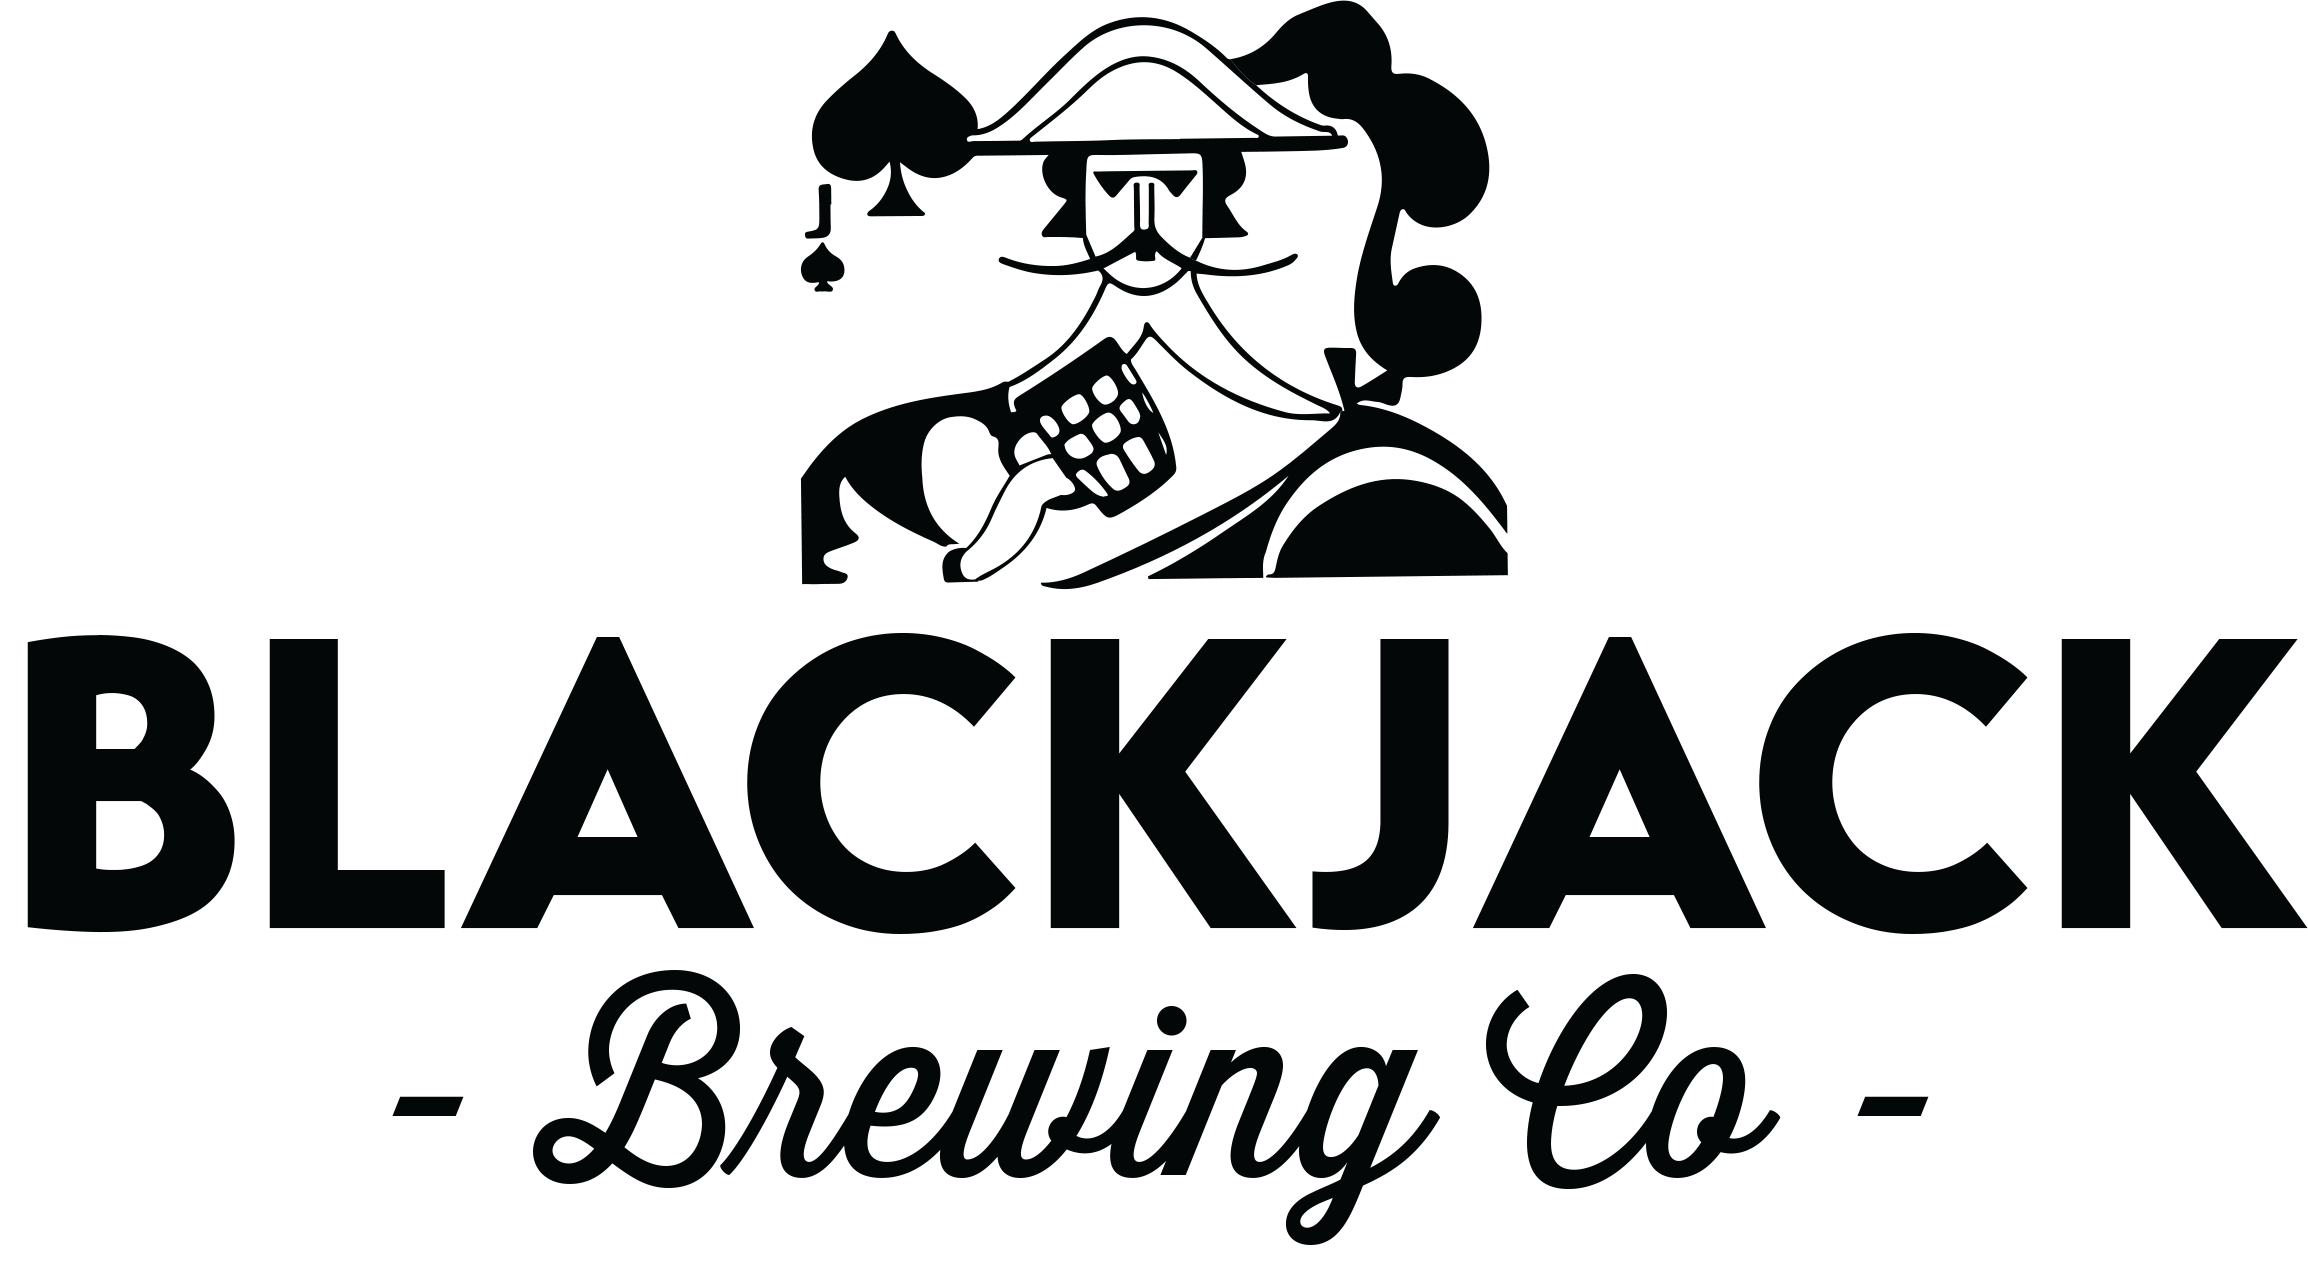 Blackjack Brewing Co